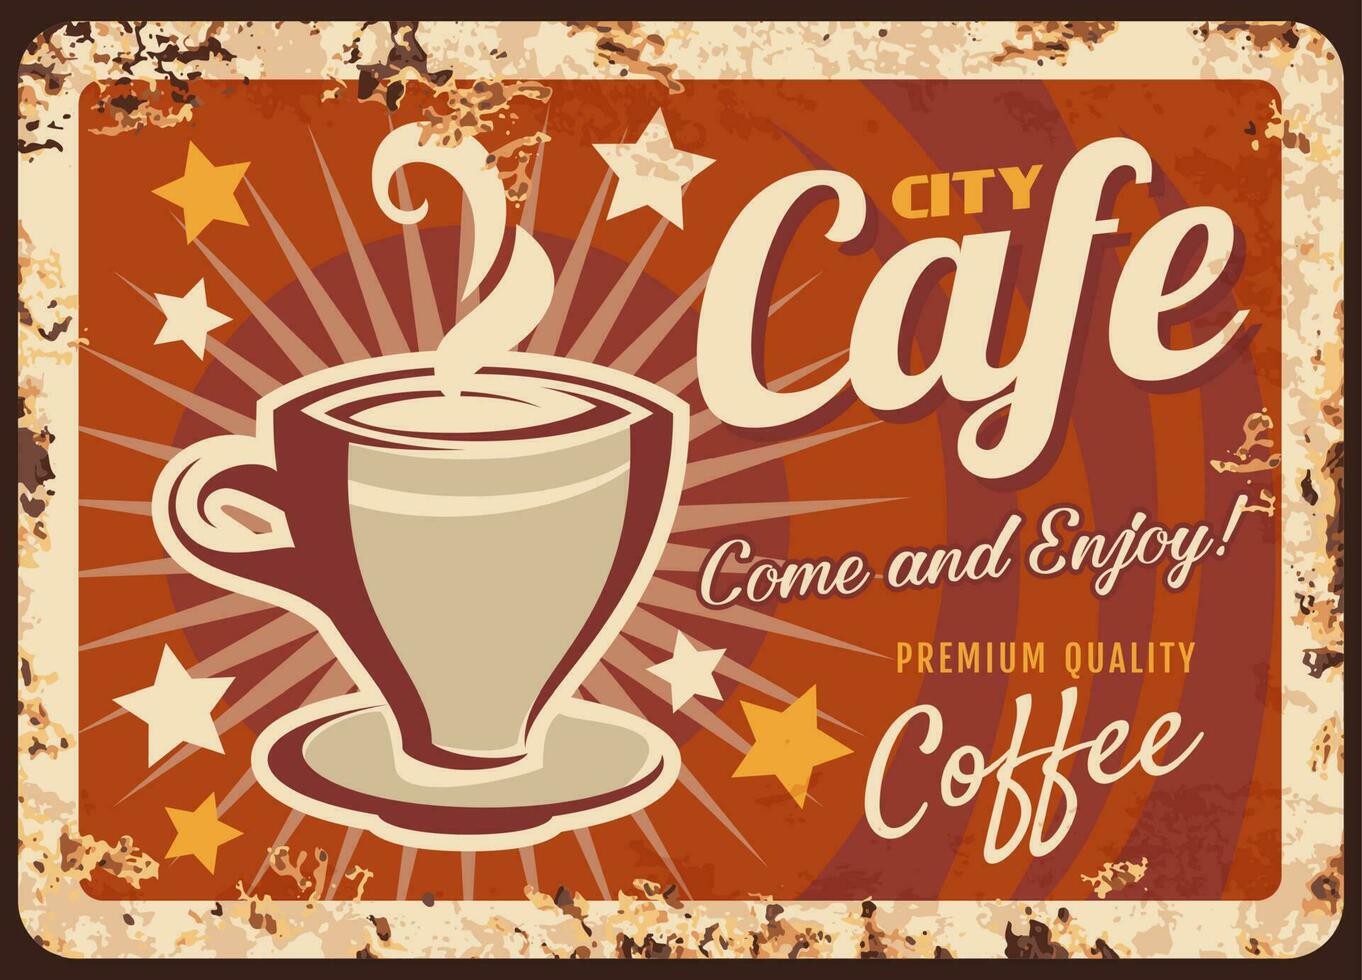 City cafe, coffee shop rusty metal vector plate